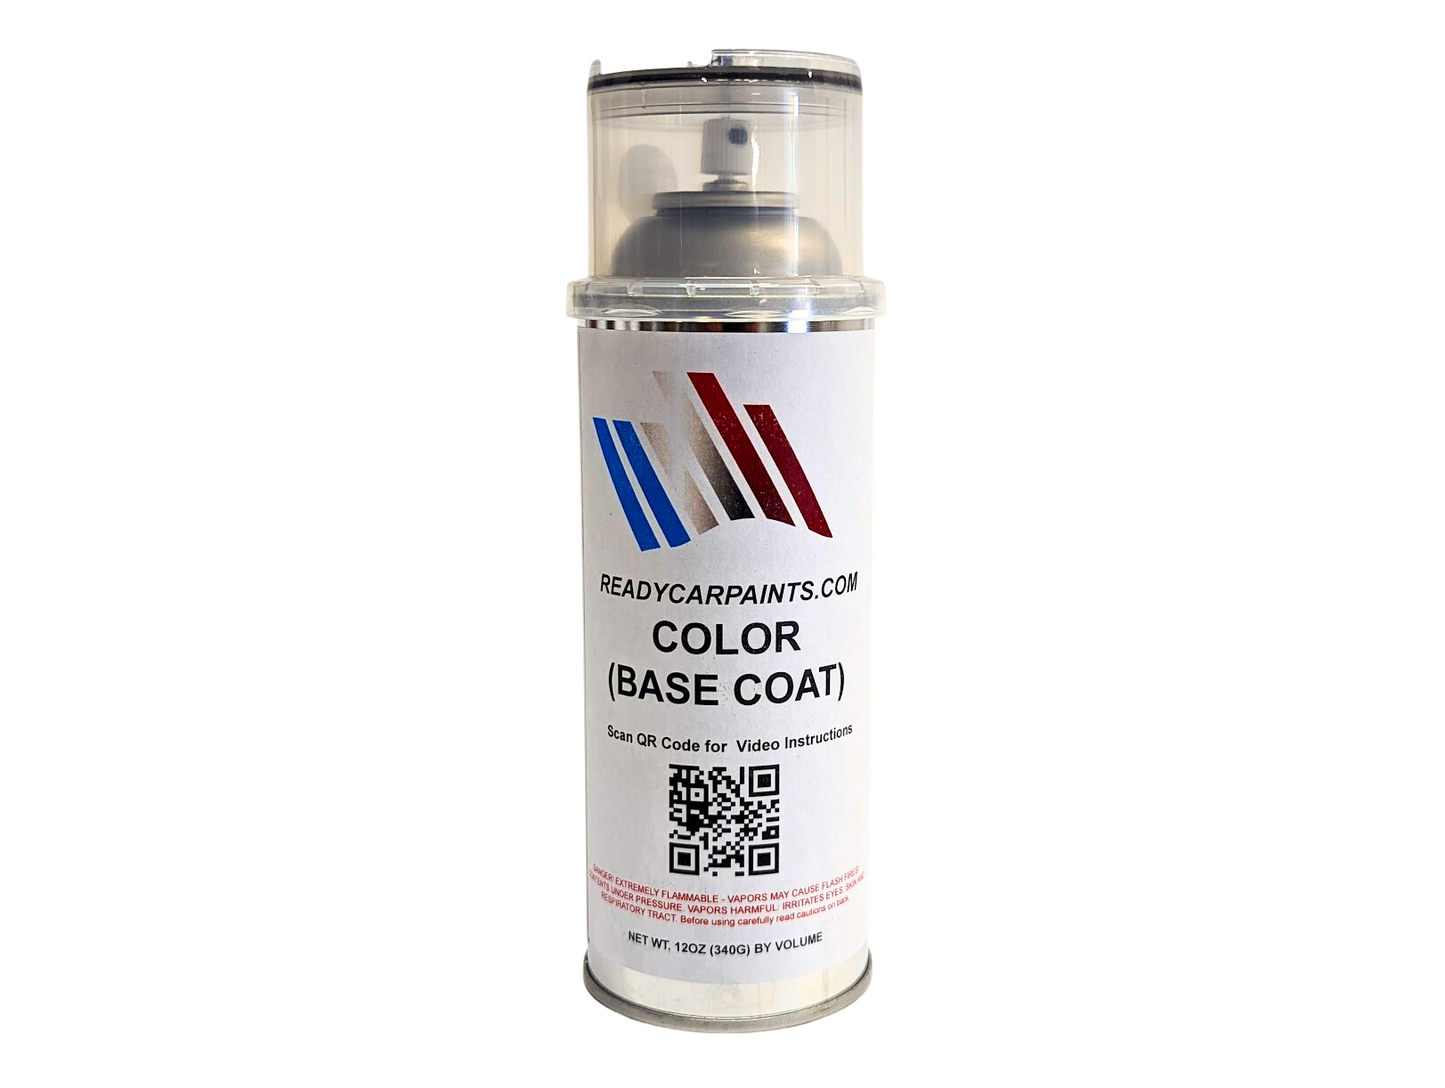 BENTLEY 6768/9562008 Extreme Silver Satin Metallic Automotive Spray Paint 100% OEM Color Match